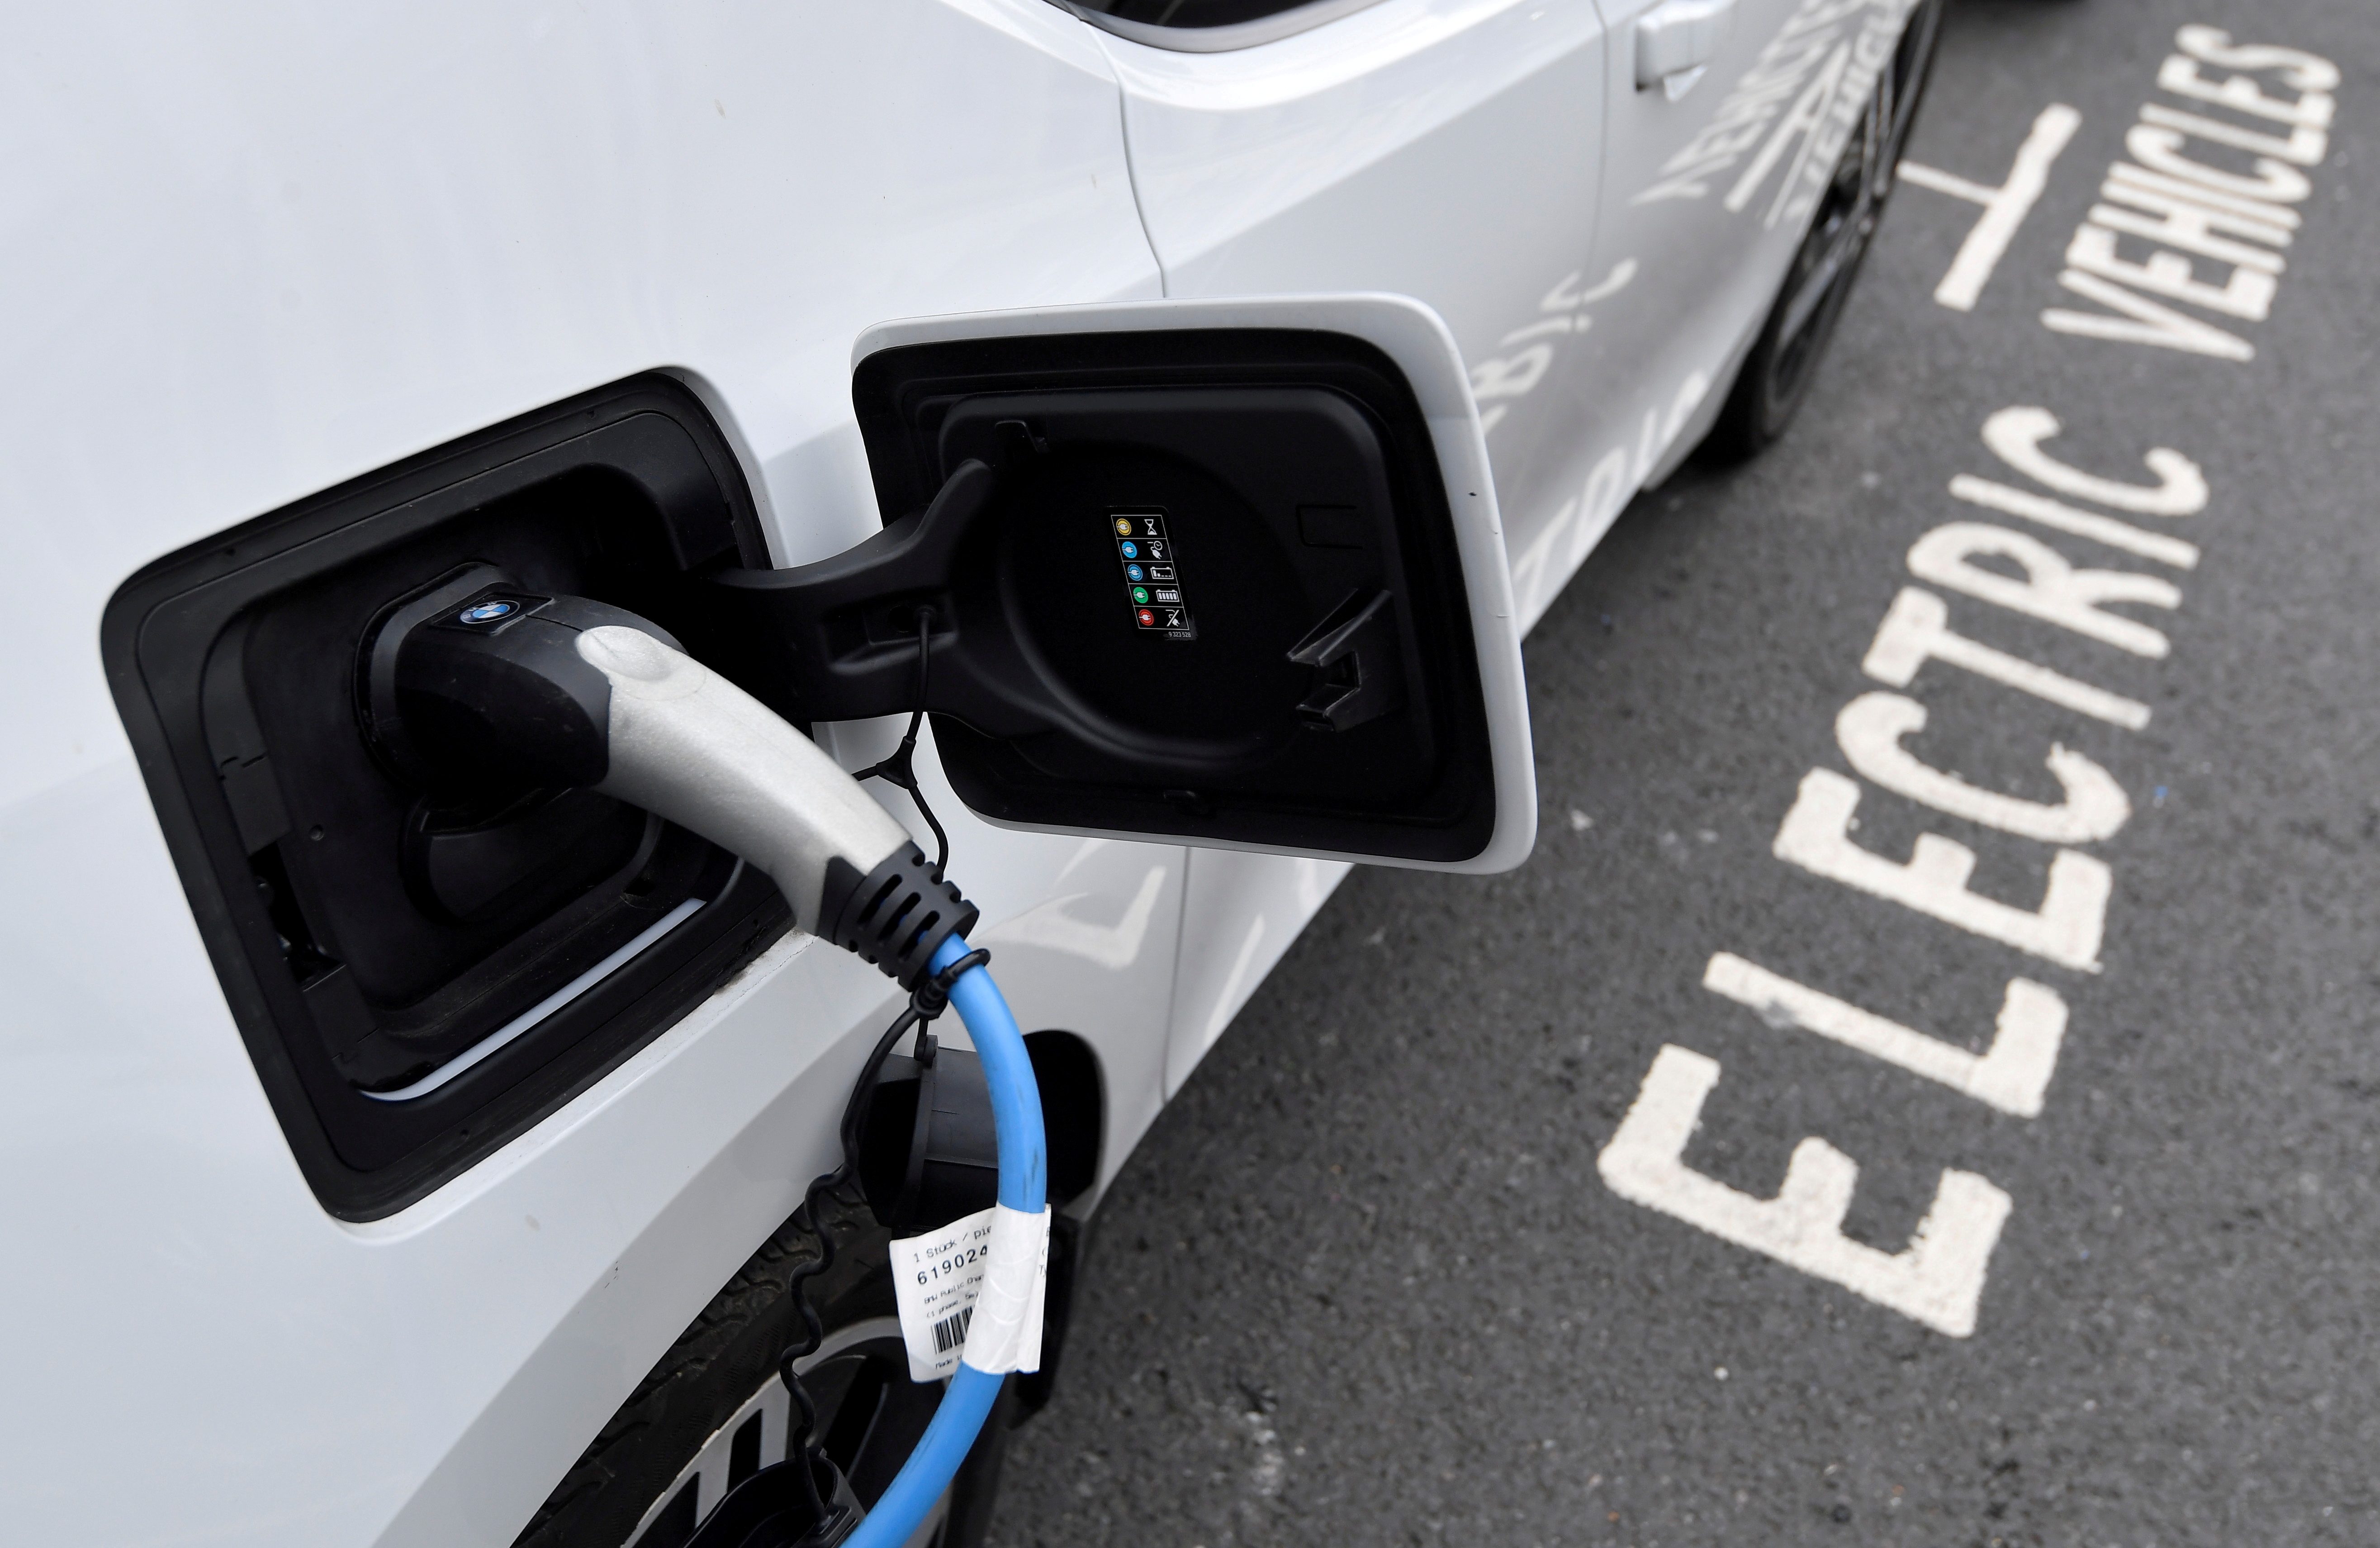 Global carmakers now target $515 billion for EVs, batteries